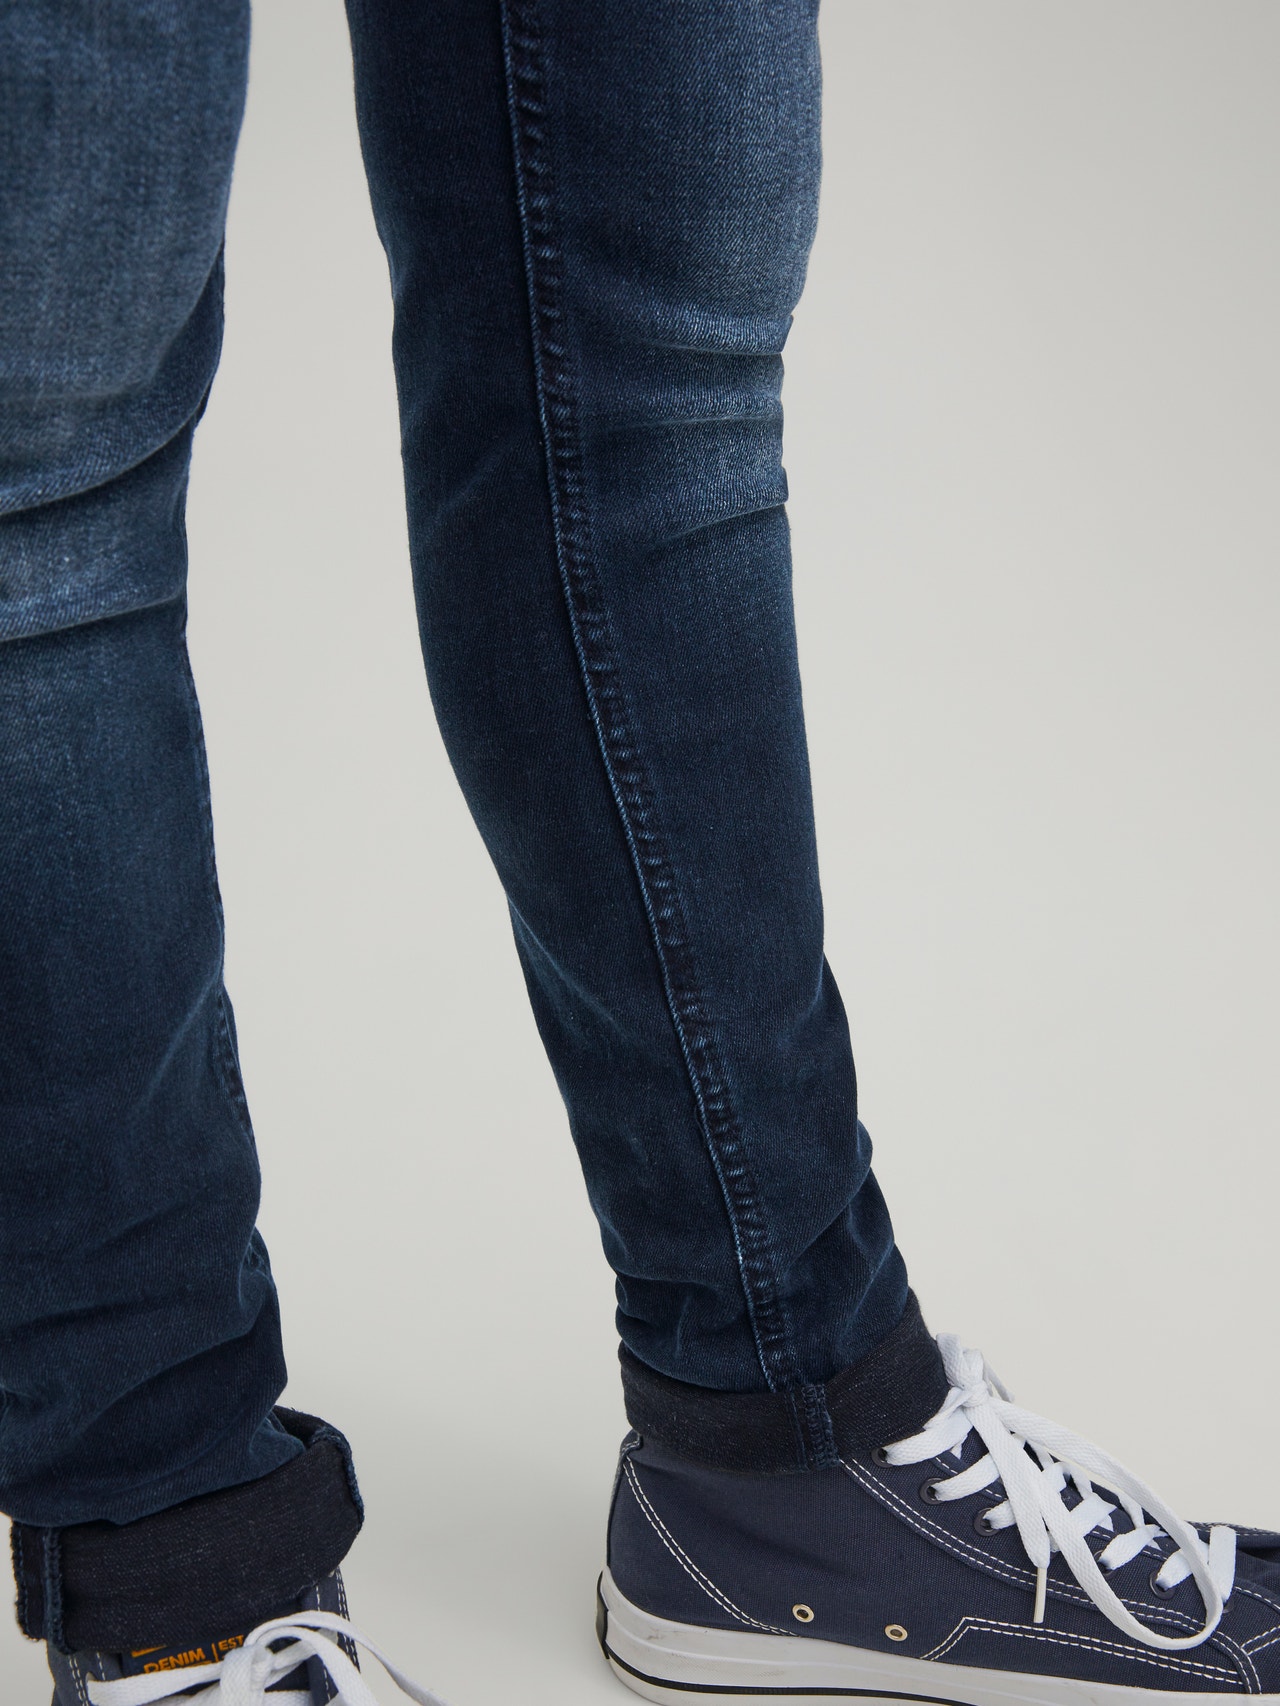 Jack & Jones JJILIAM JJORIGINAL AGI 004 Skinny fit jeans Voor jongens -Blue Denim - 12227863